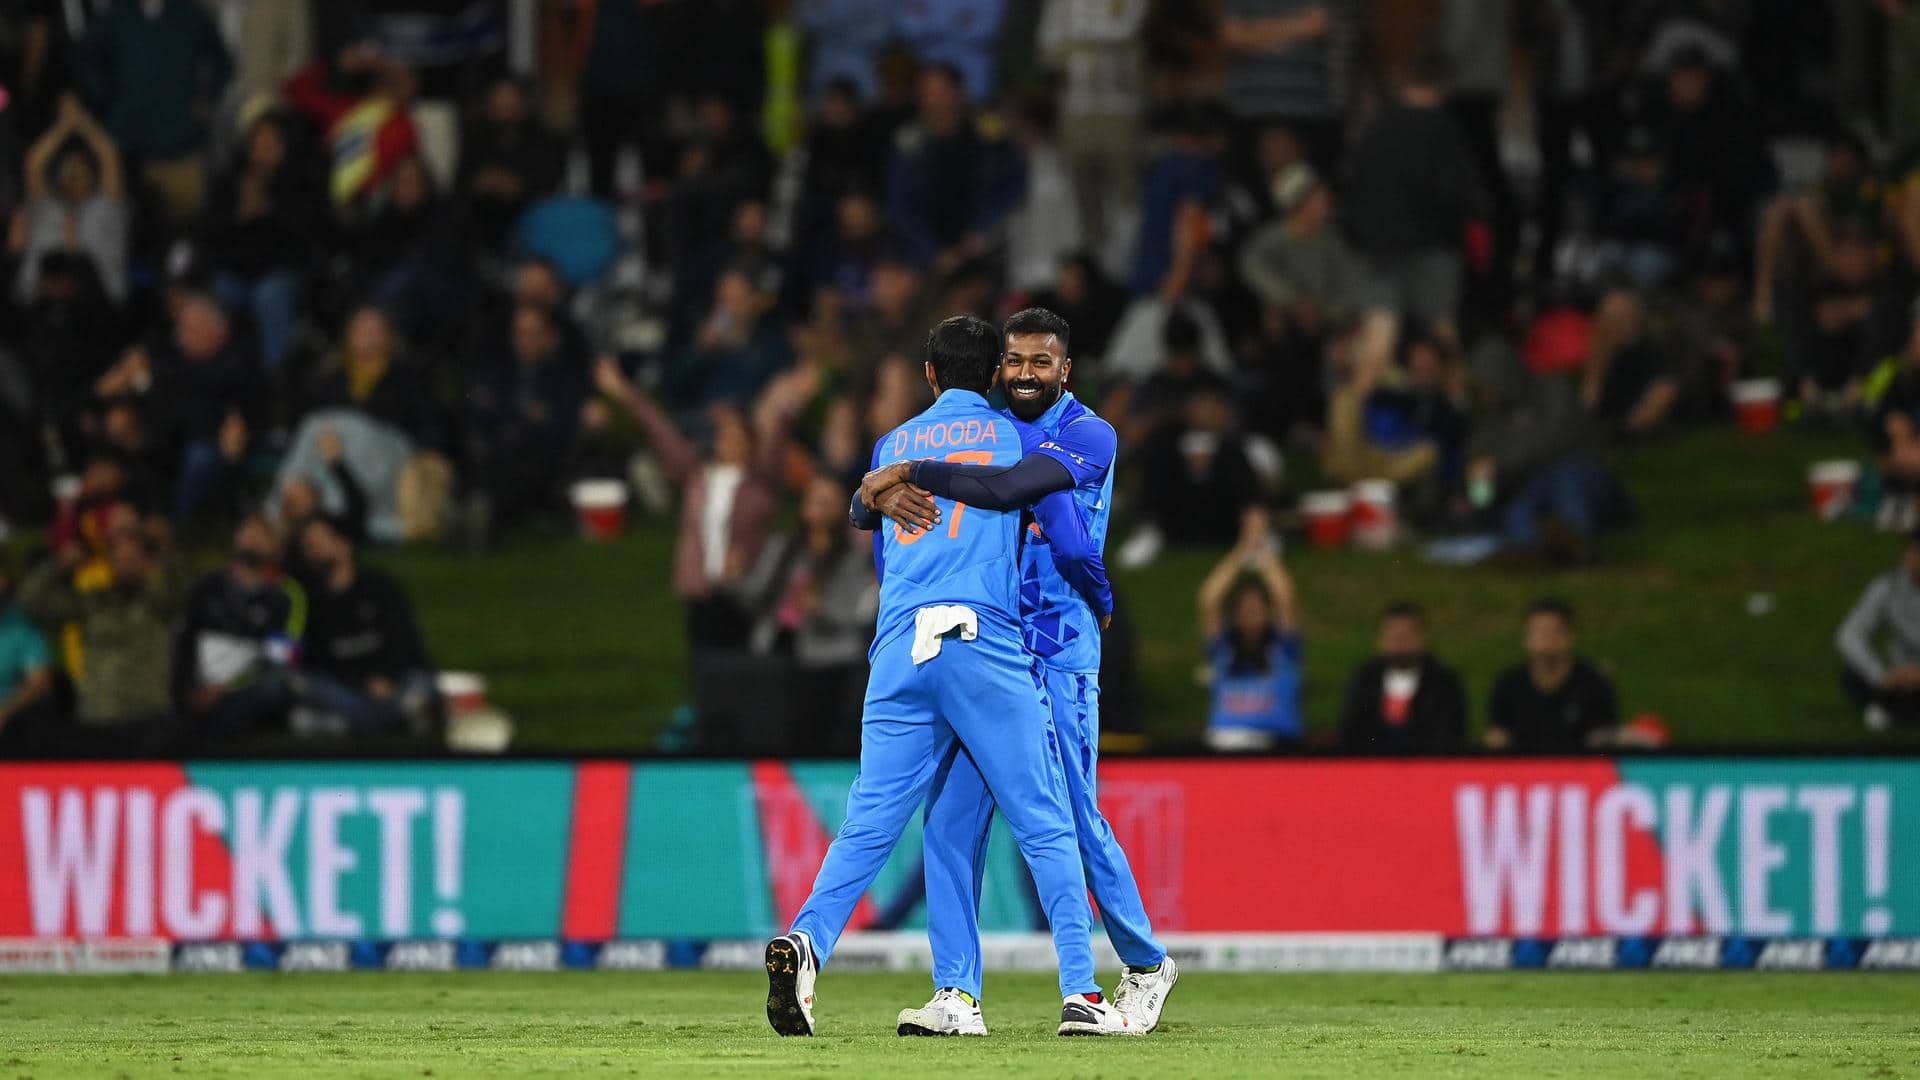 NZ vs IND, Deepak Hooda claims career-best 4/10: Key stats